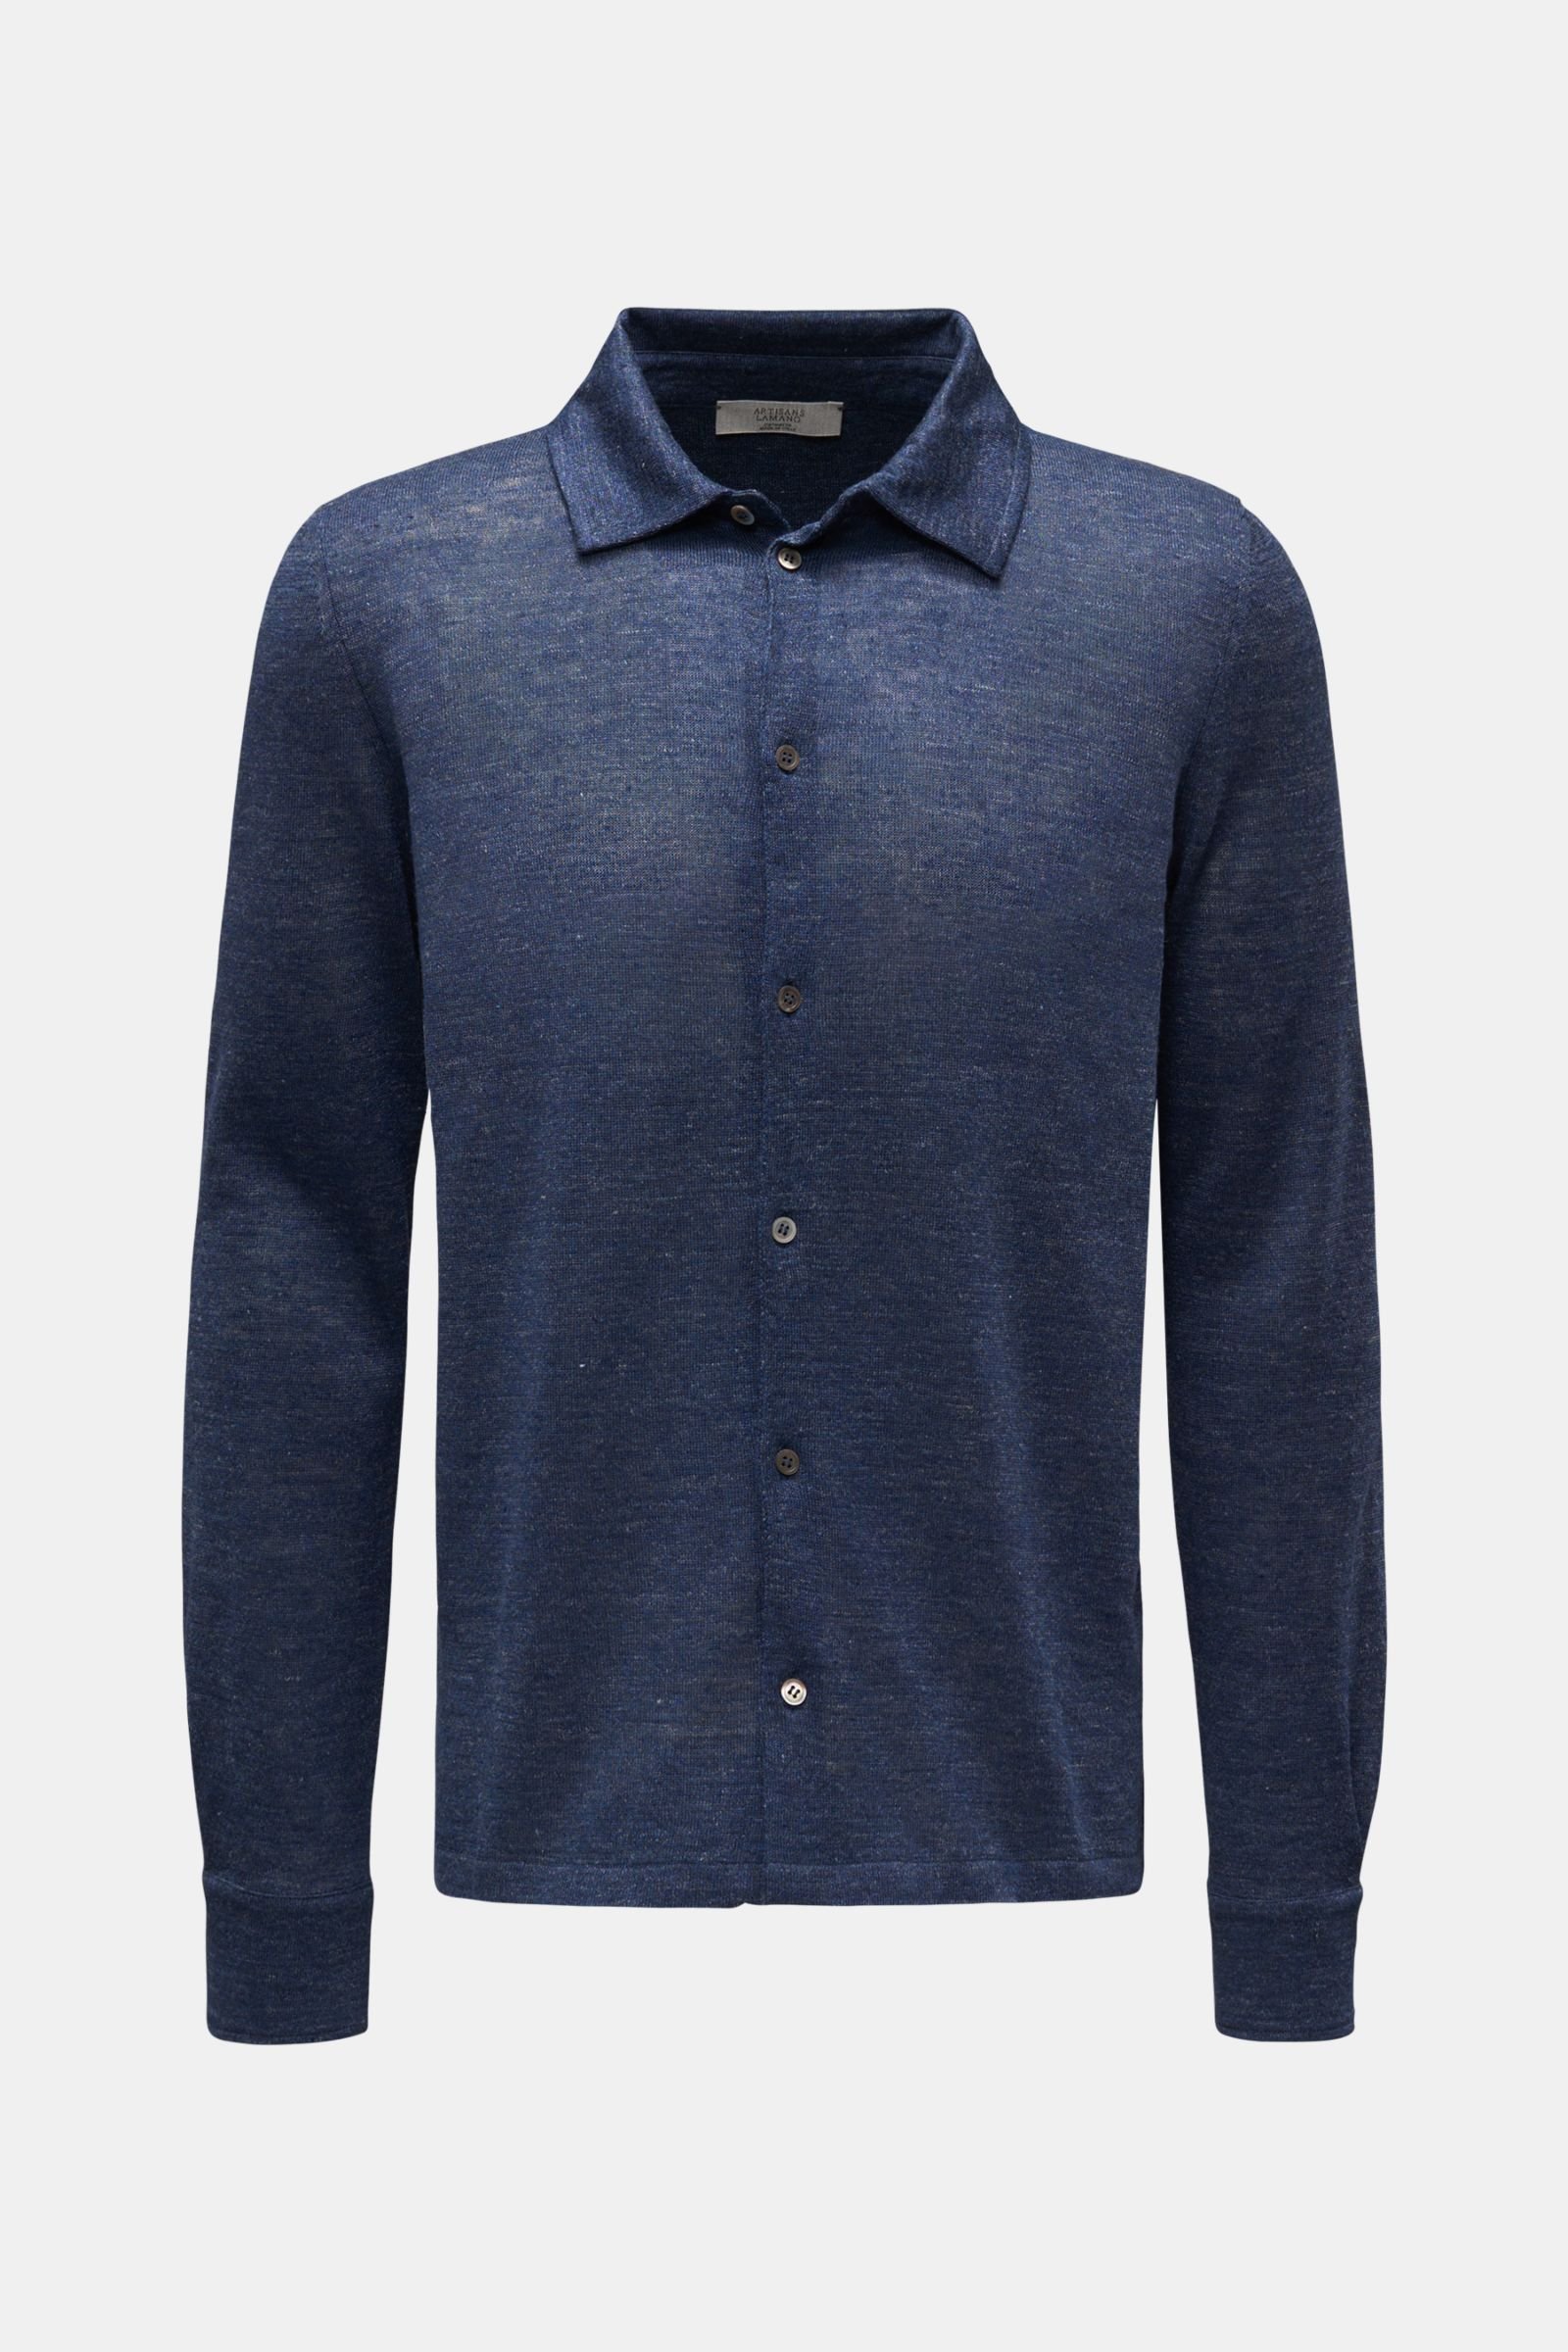 Knit shirt slim collar grey-blue